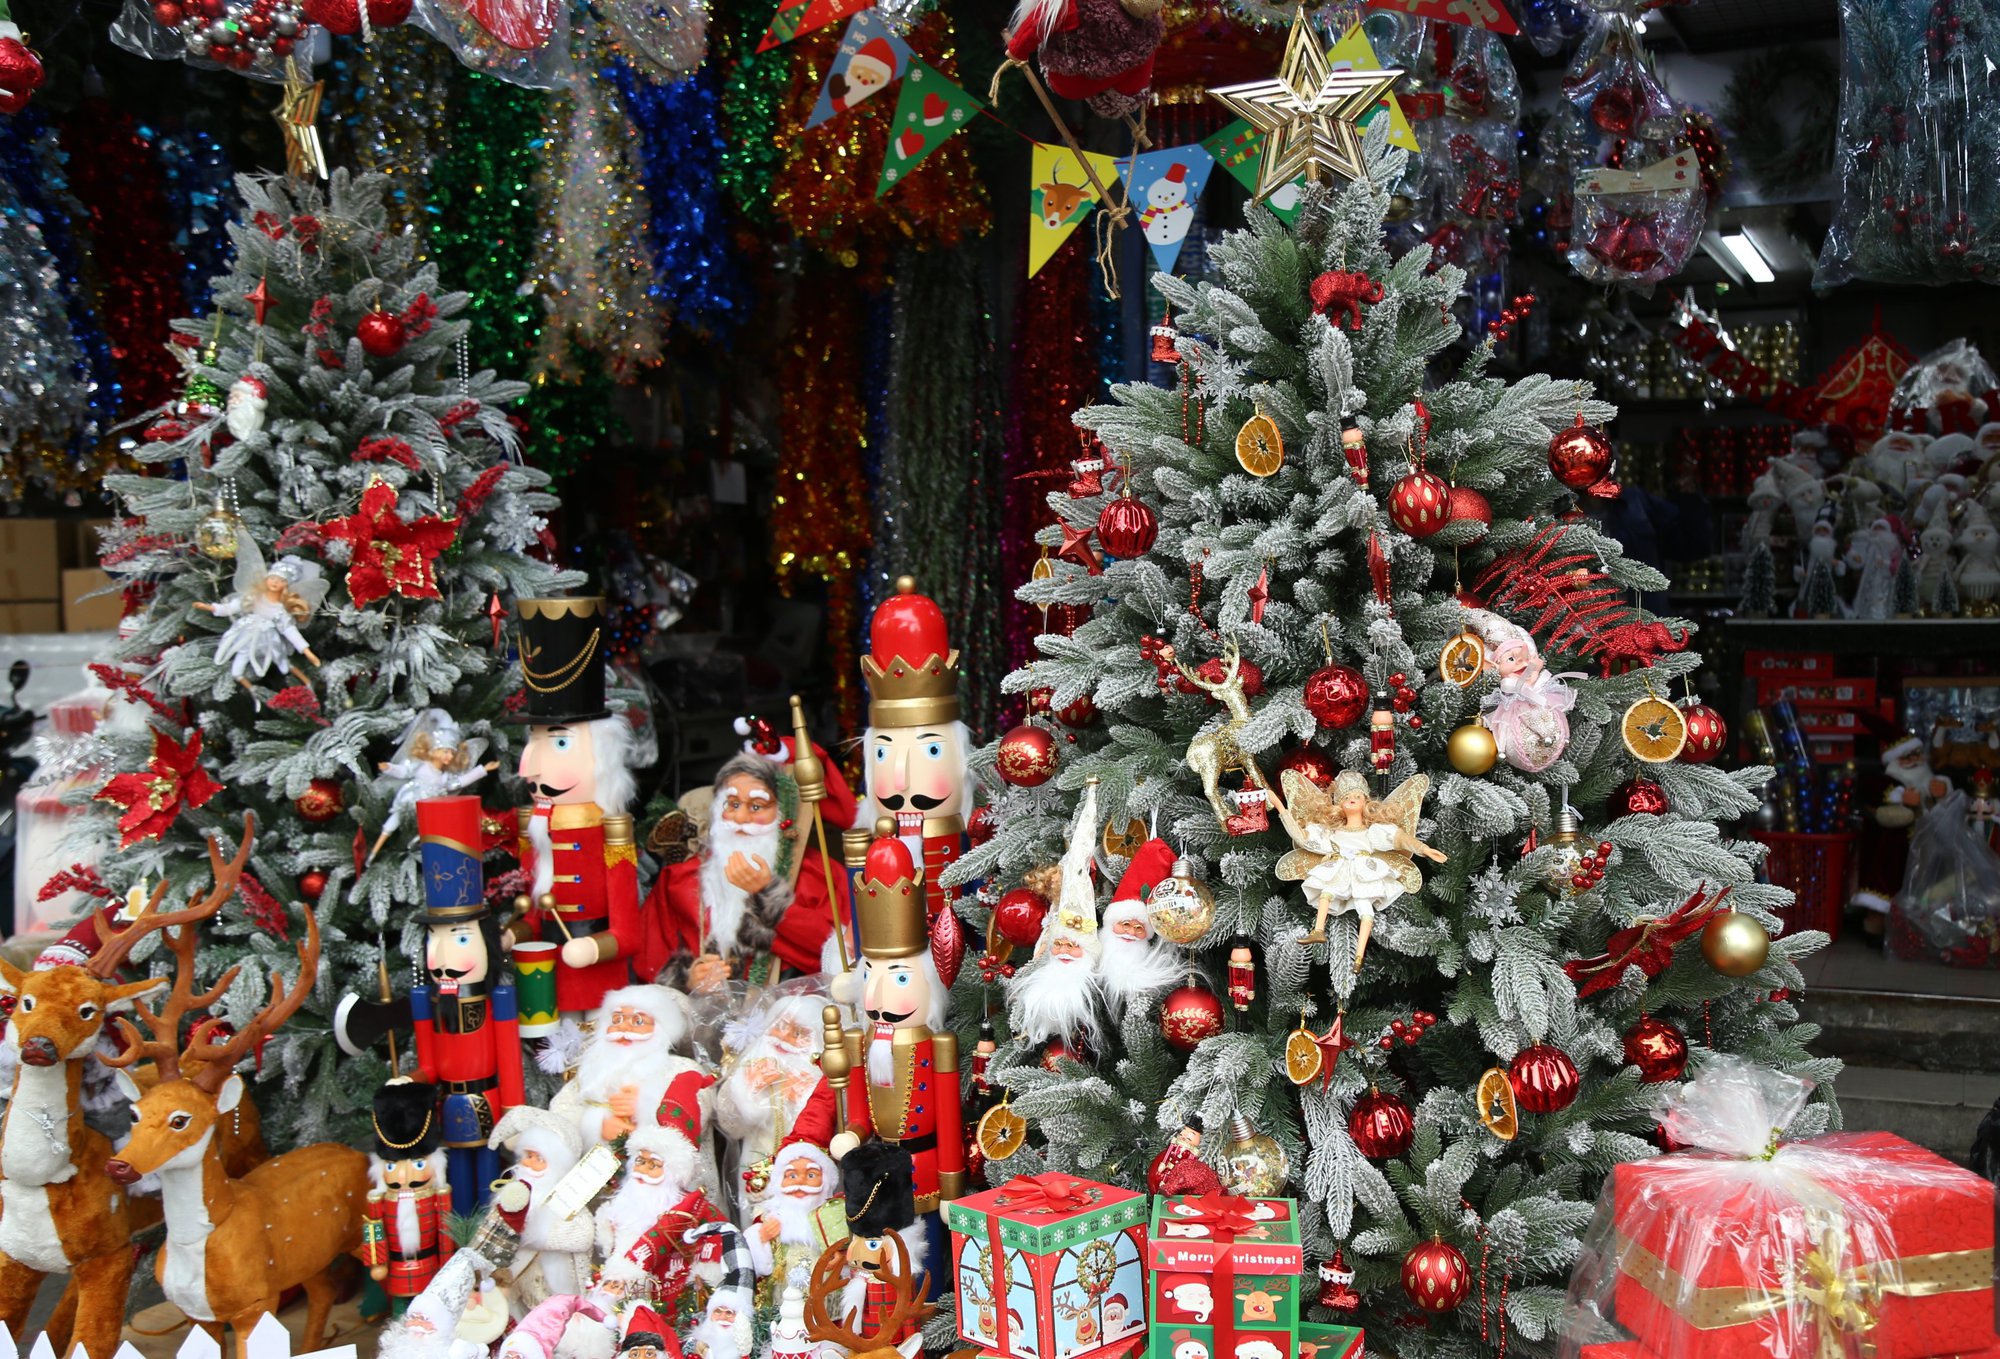 Joyeux Noël with these decorations noel ideas